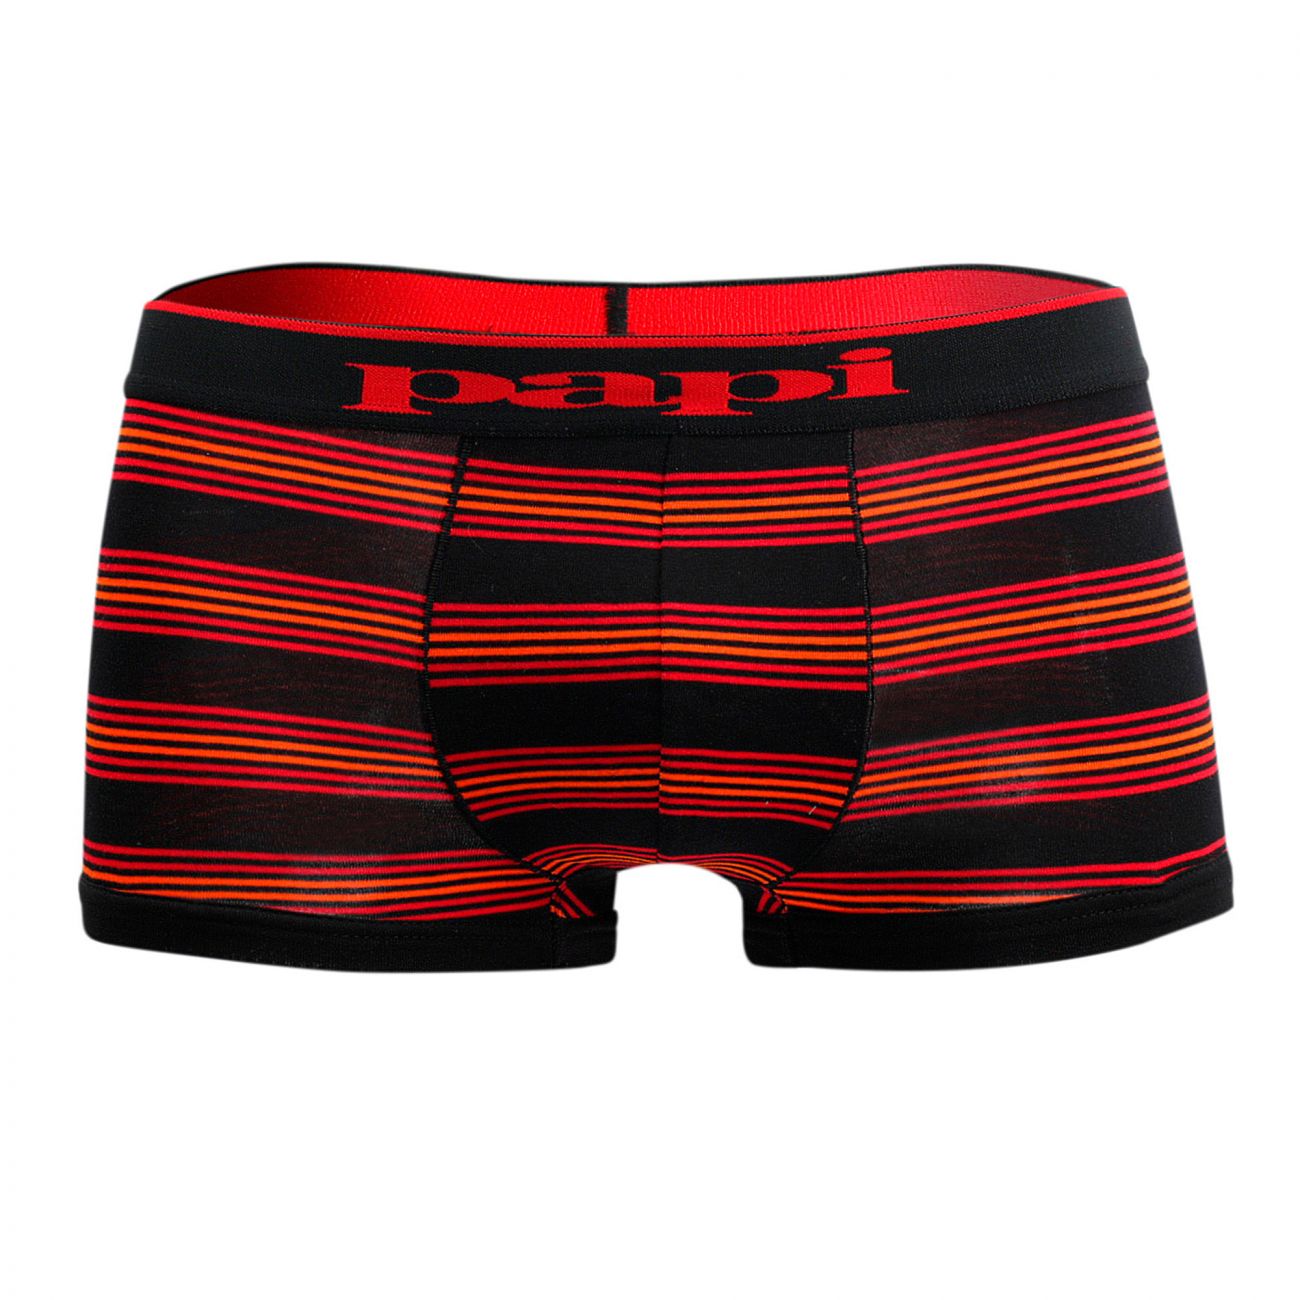 Papi 980503-982 Cotton Stretch Brazilian Yarndye Band Stripe Red Black